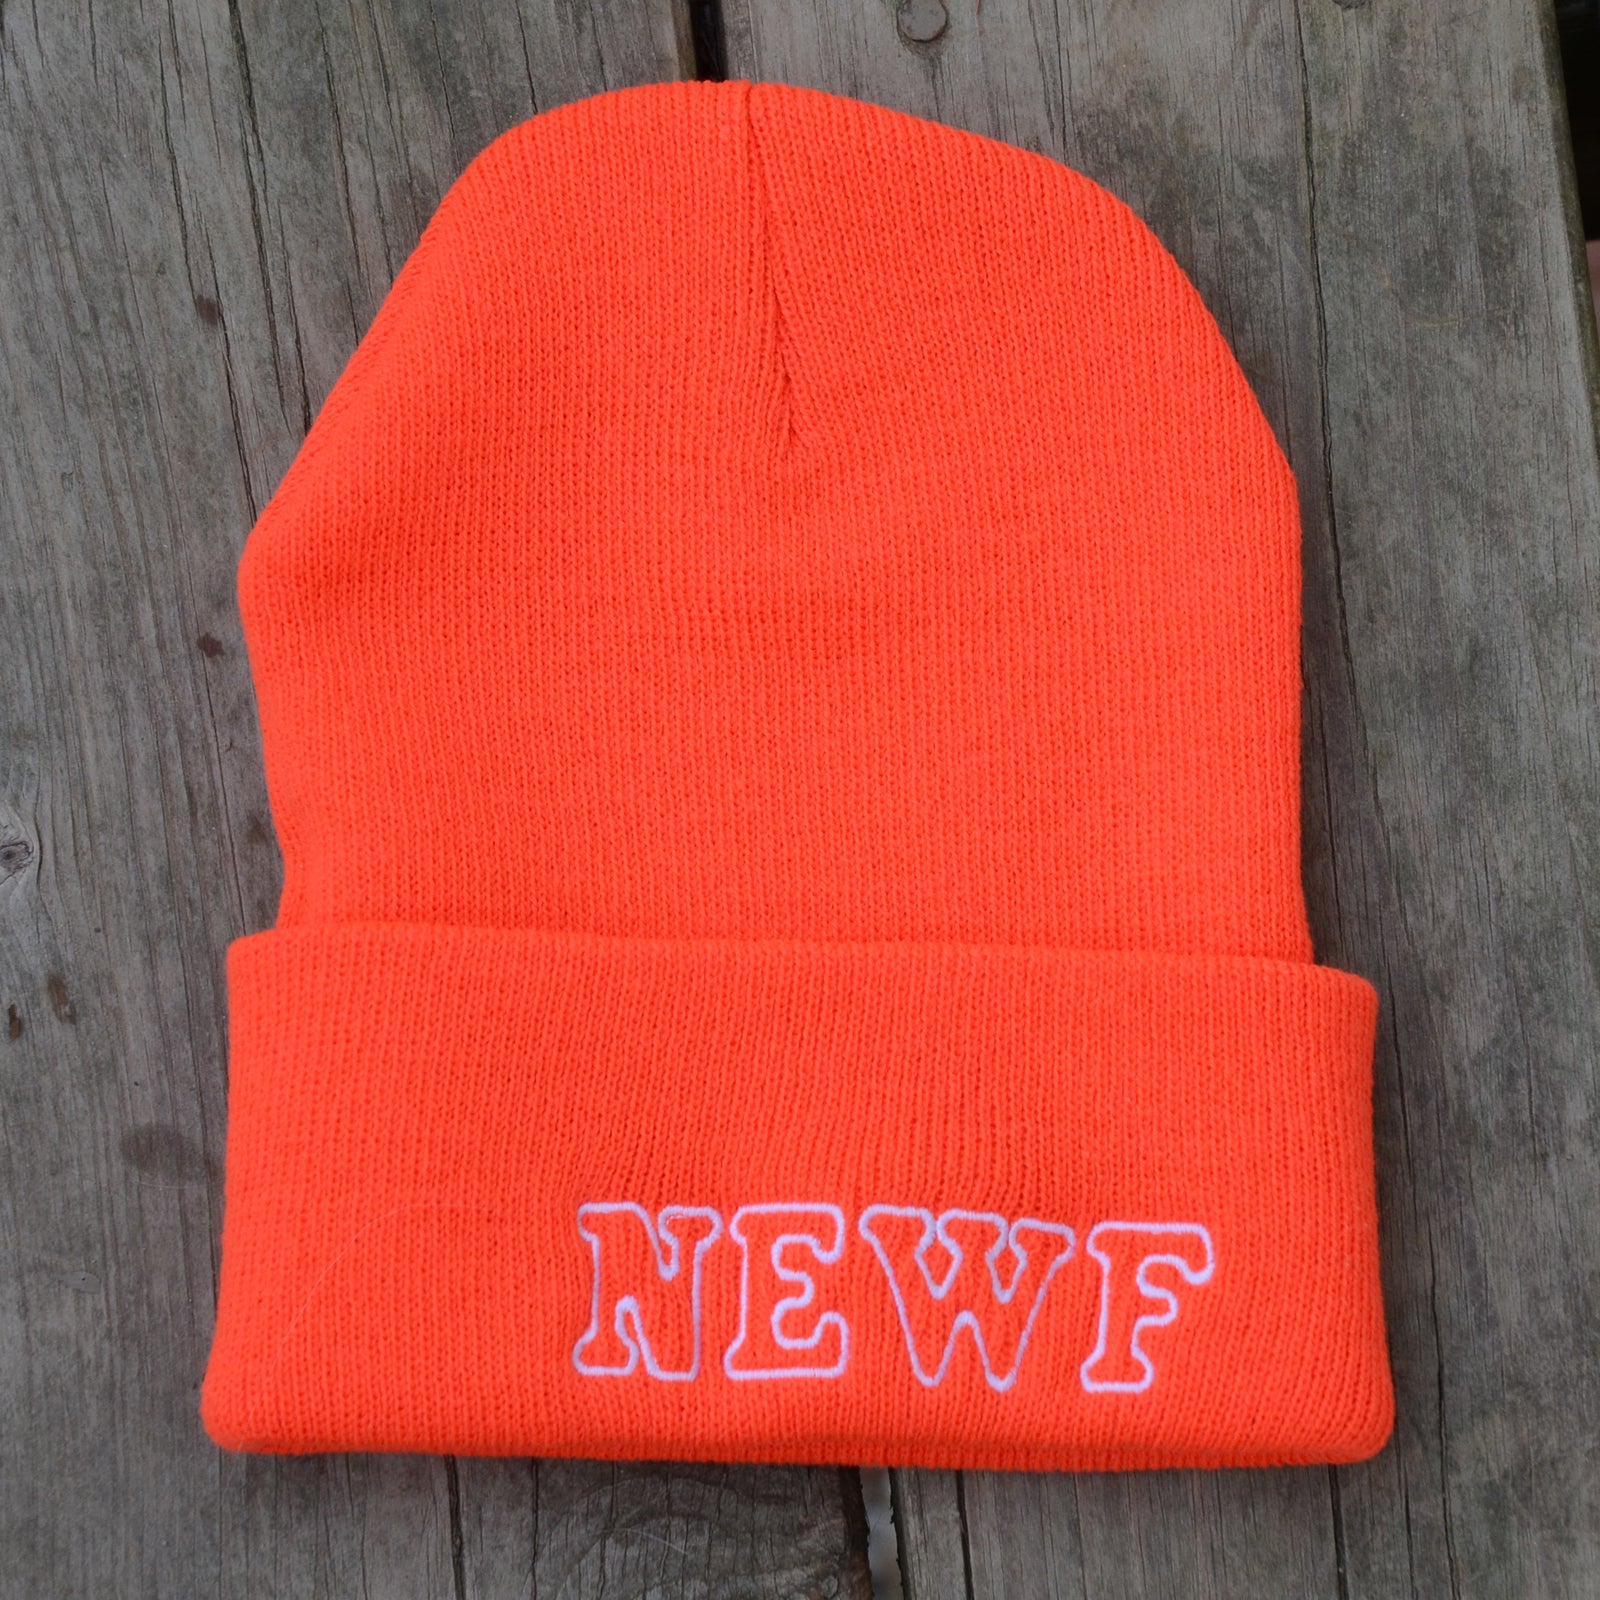 Adult Knit Beanie - Newf, orange, white embroidery